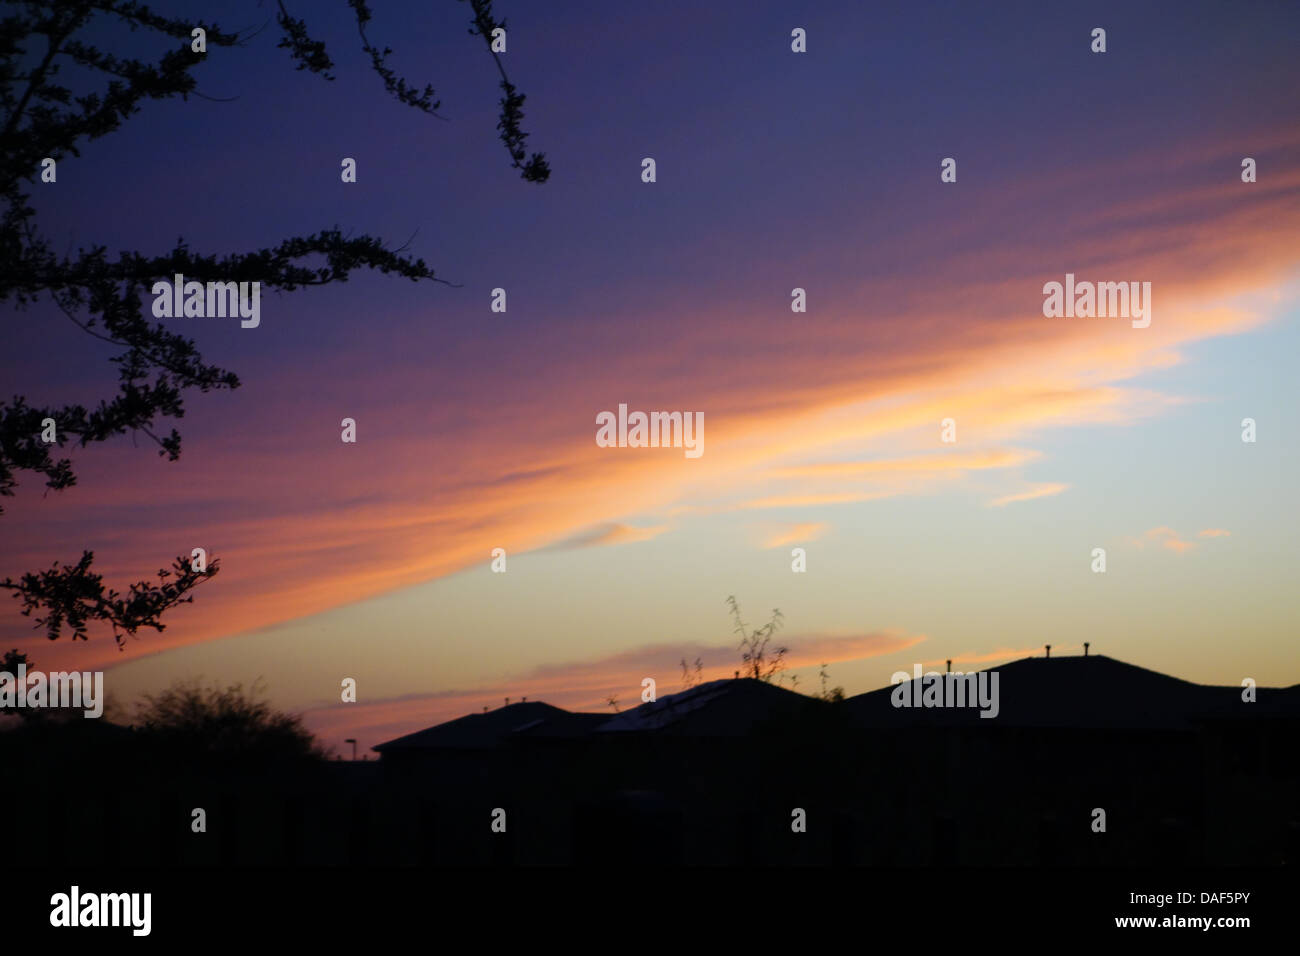 Arizona, Sunset, Trees, Silhouette, Houses AZ, Anthem Stock Photo